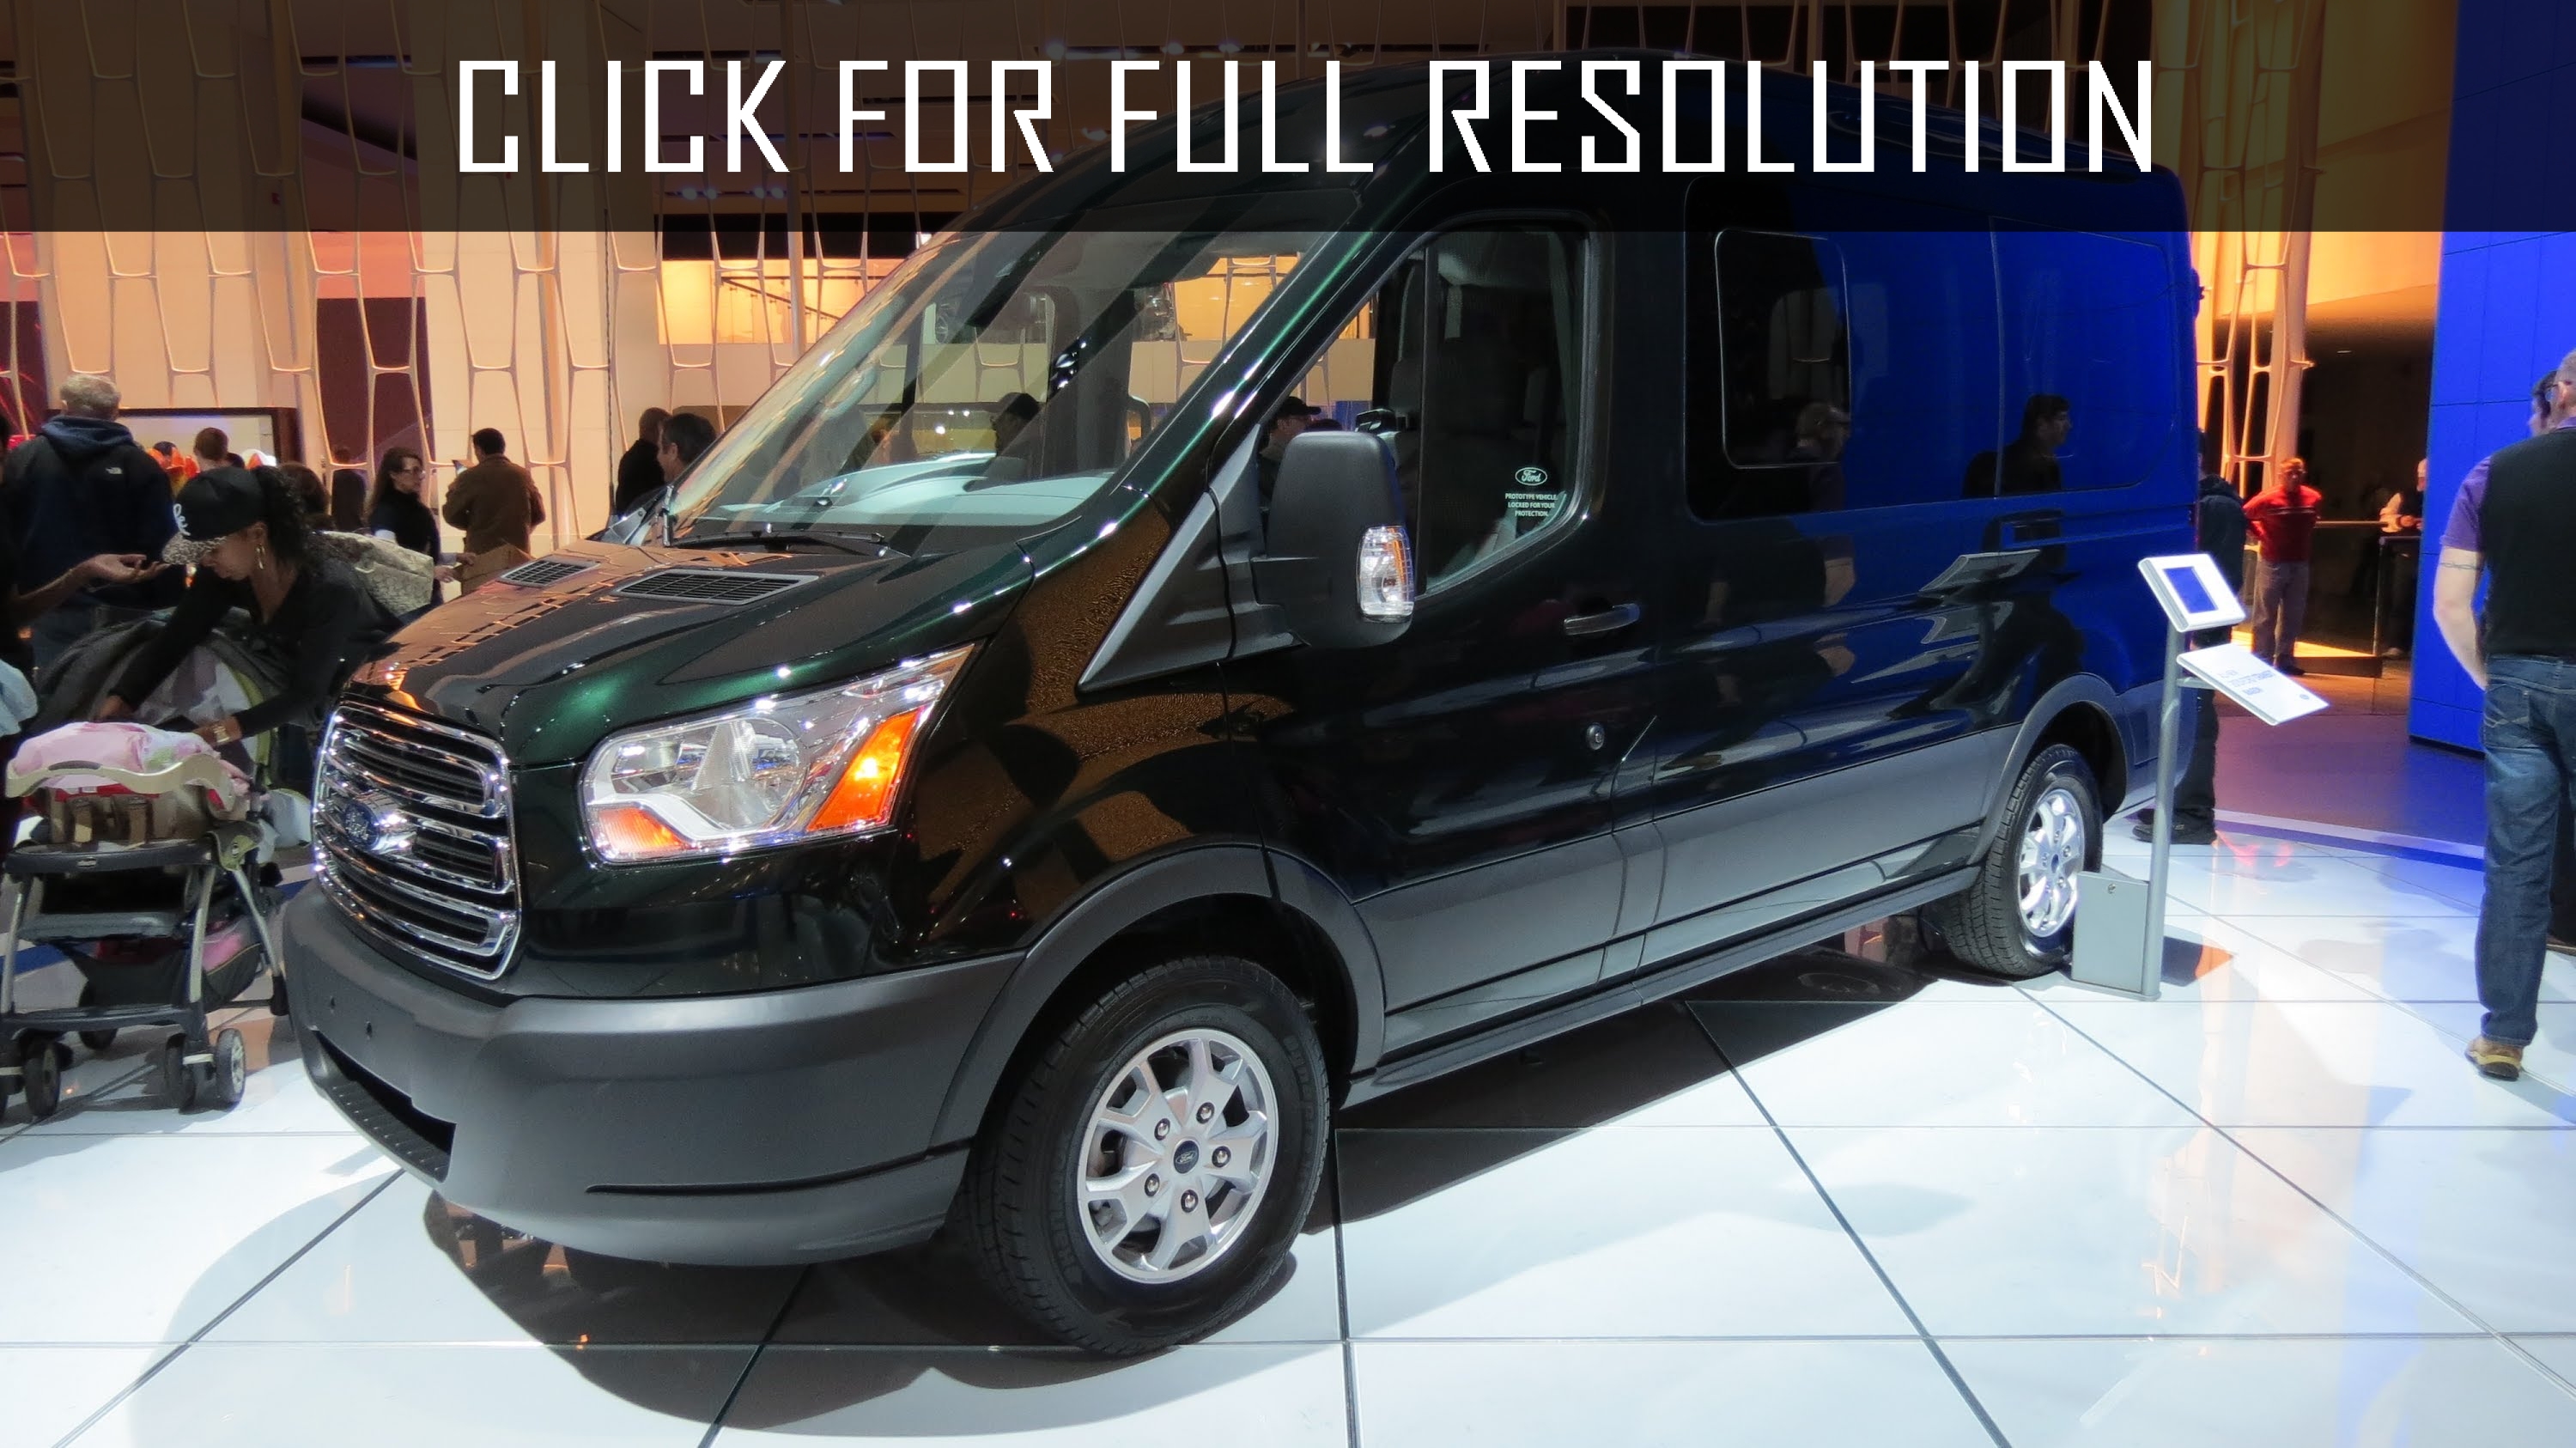 Ford Transit Wagon 2015